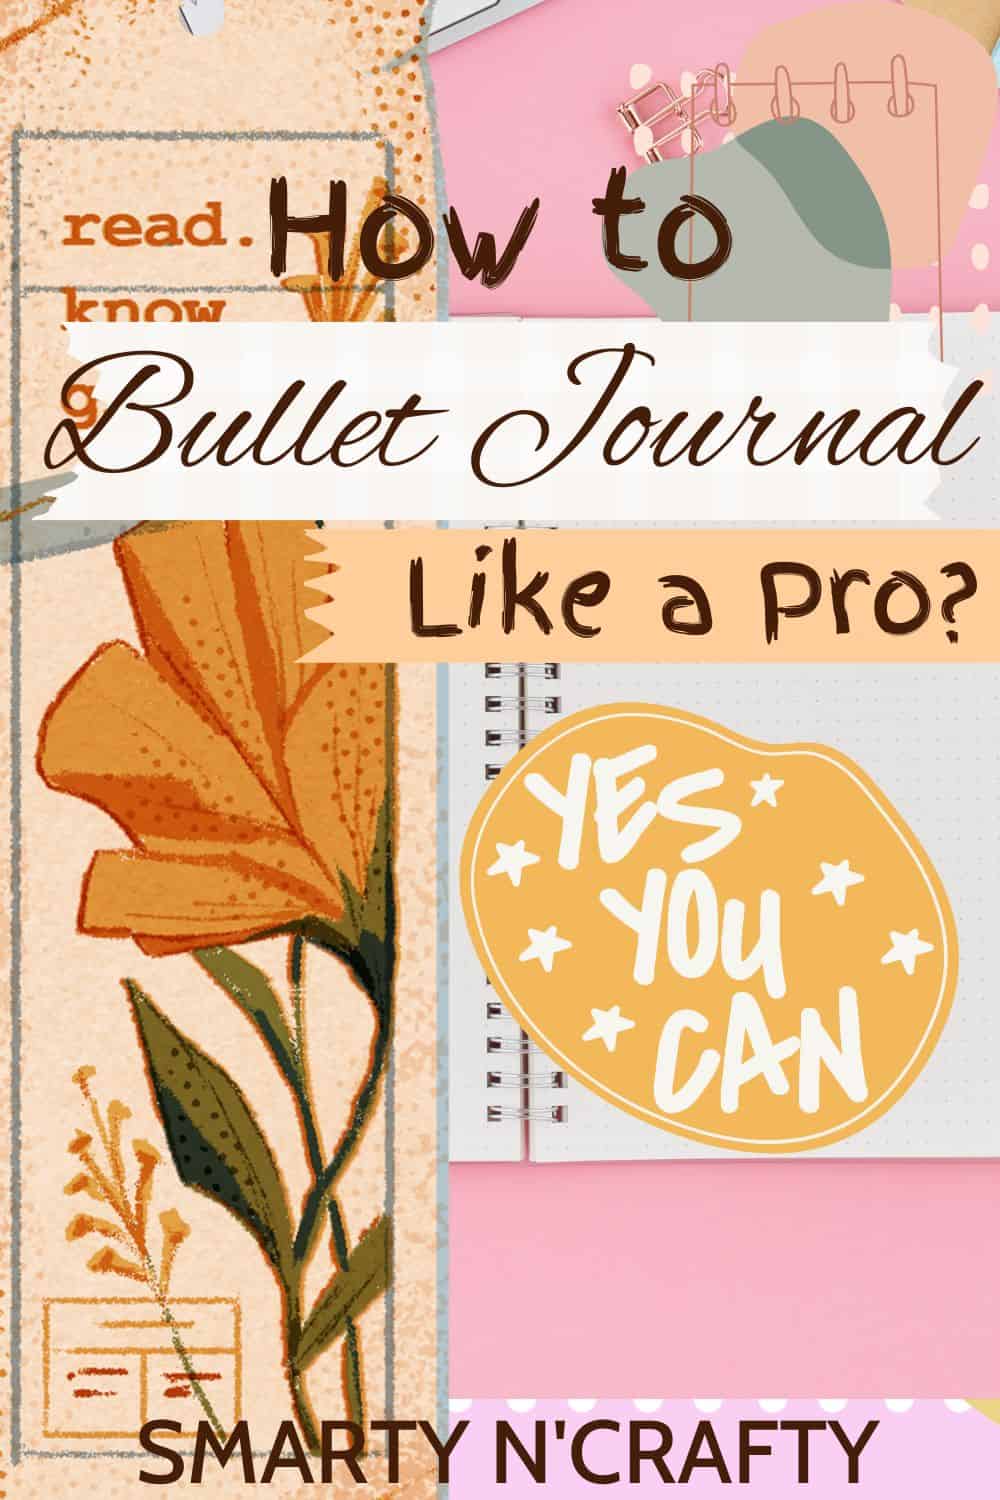 bullet journaling like a pro